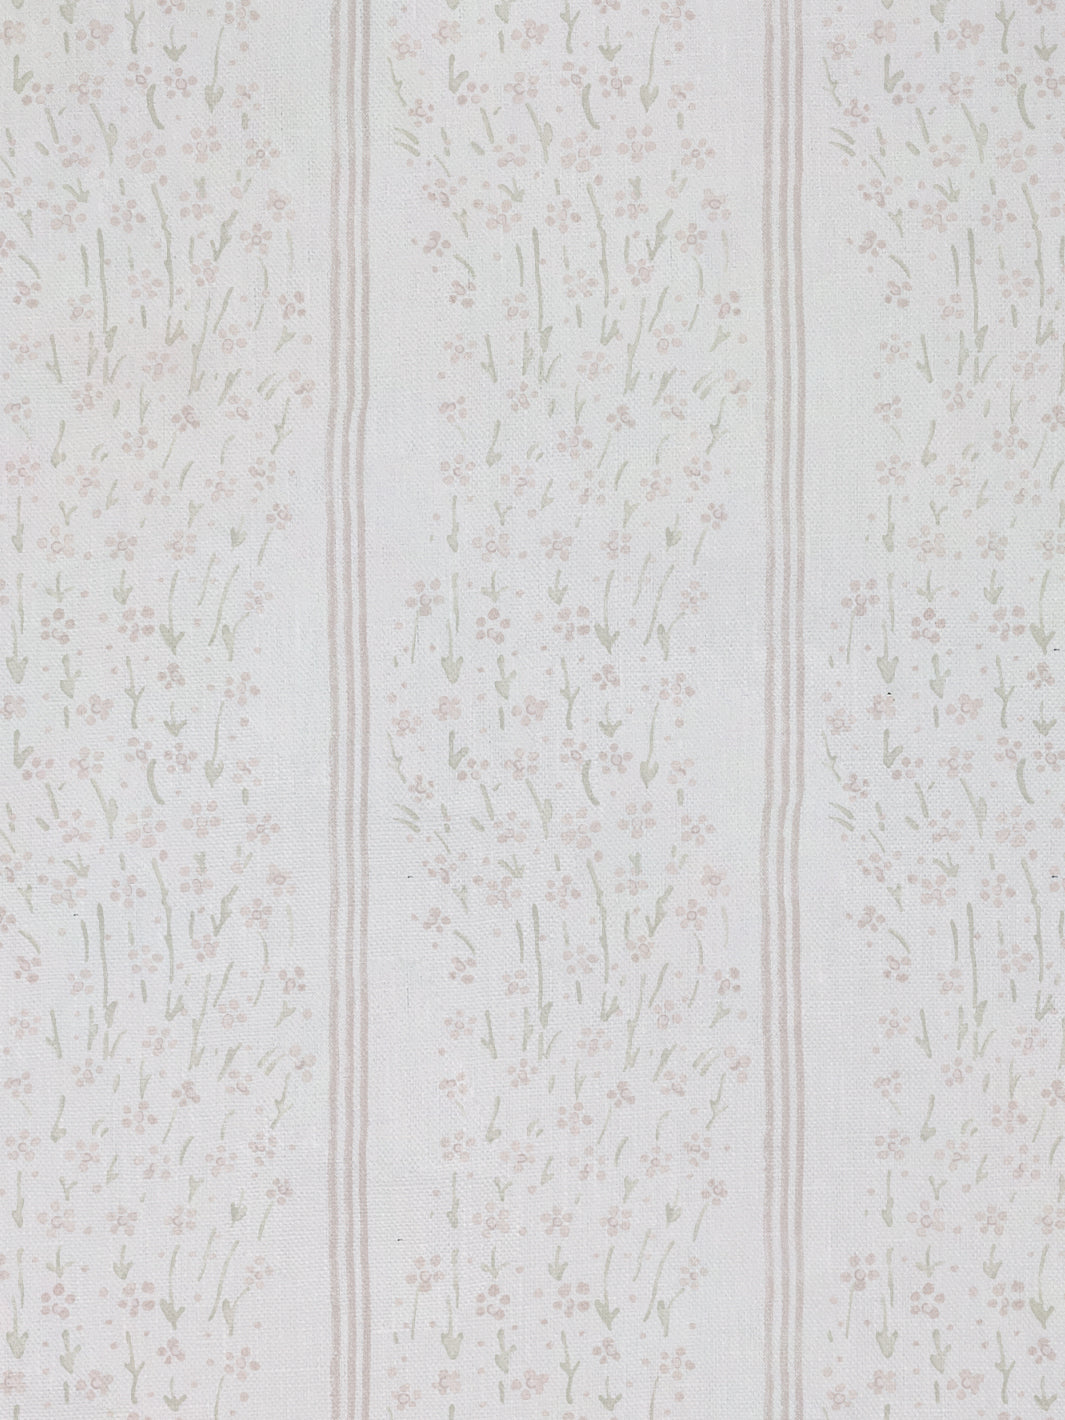 &#39;Hillhouse Floral Disty Wave Stripe&#39; Linen Fabric - Pink Green